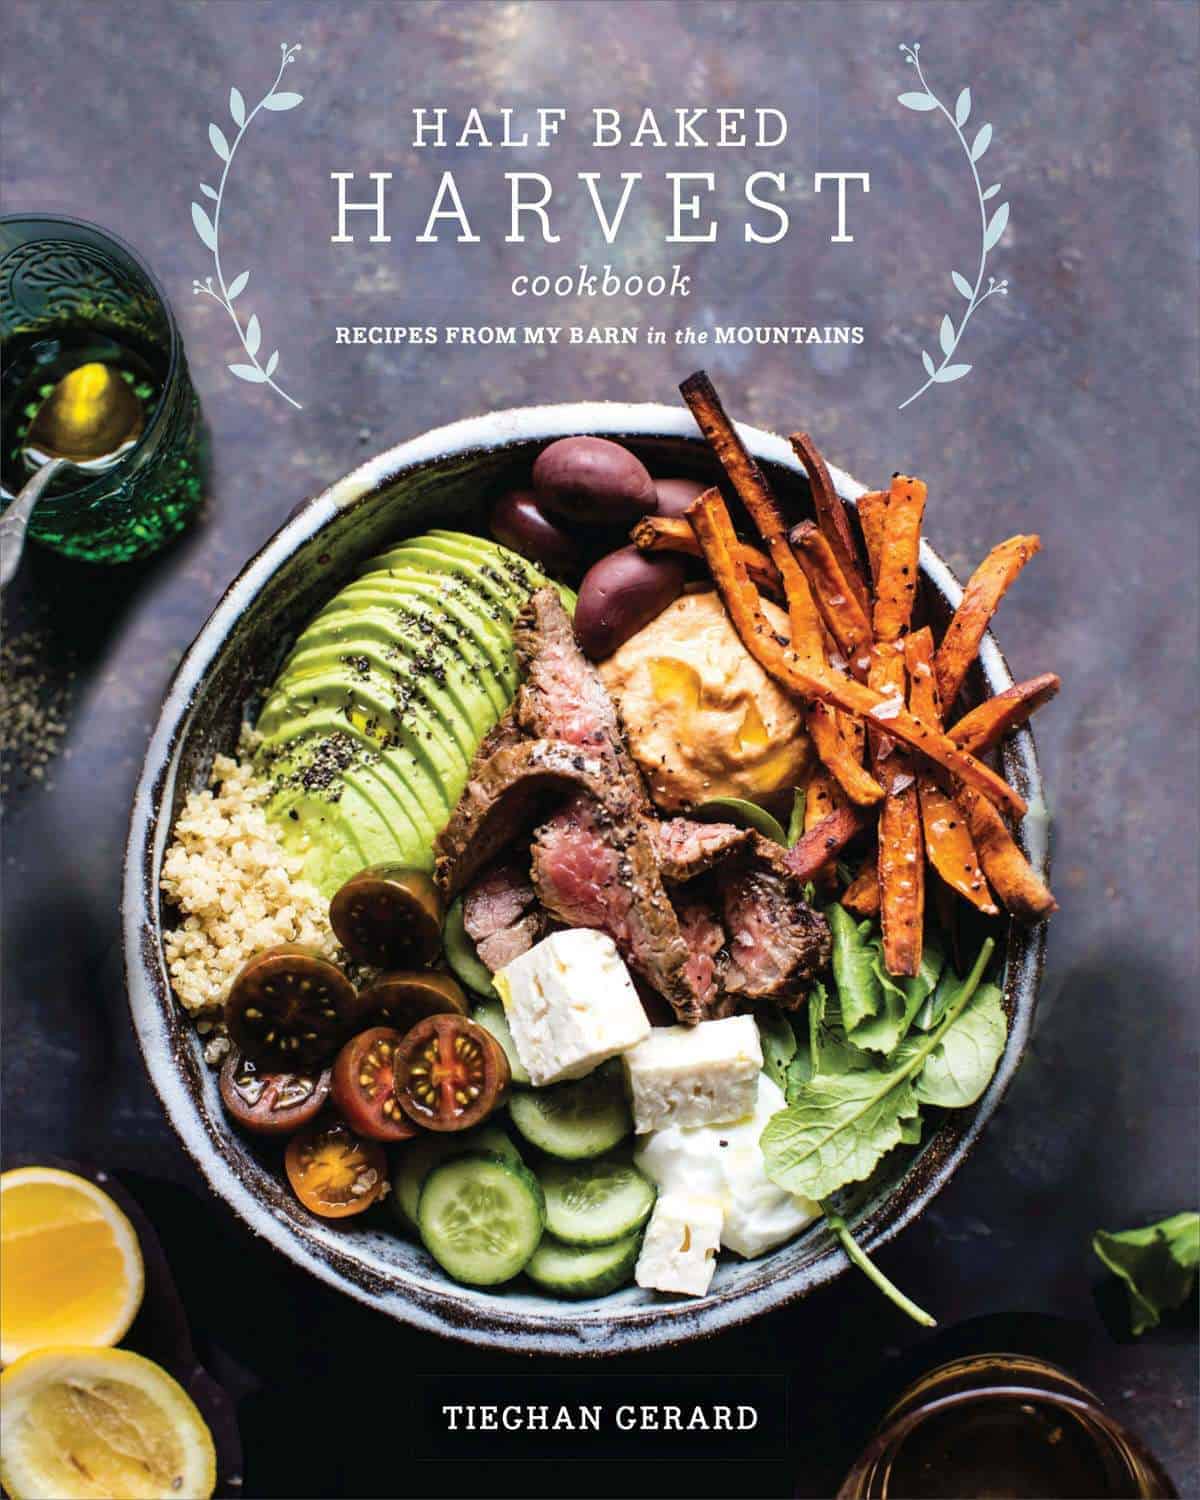 The Half Baked Harvest Cookbook: Cover Reveal and a Giveaway! | halfbakedharvest.com @hbharvest